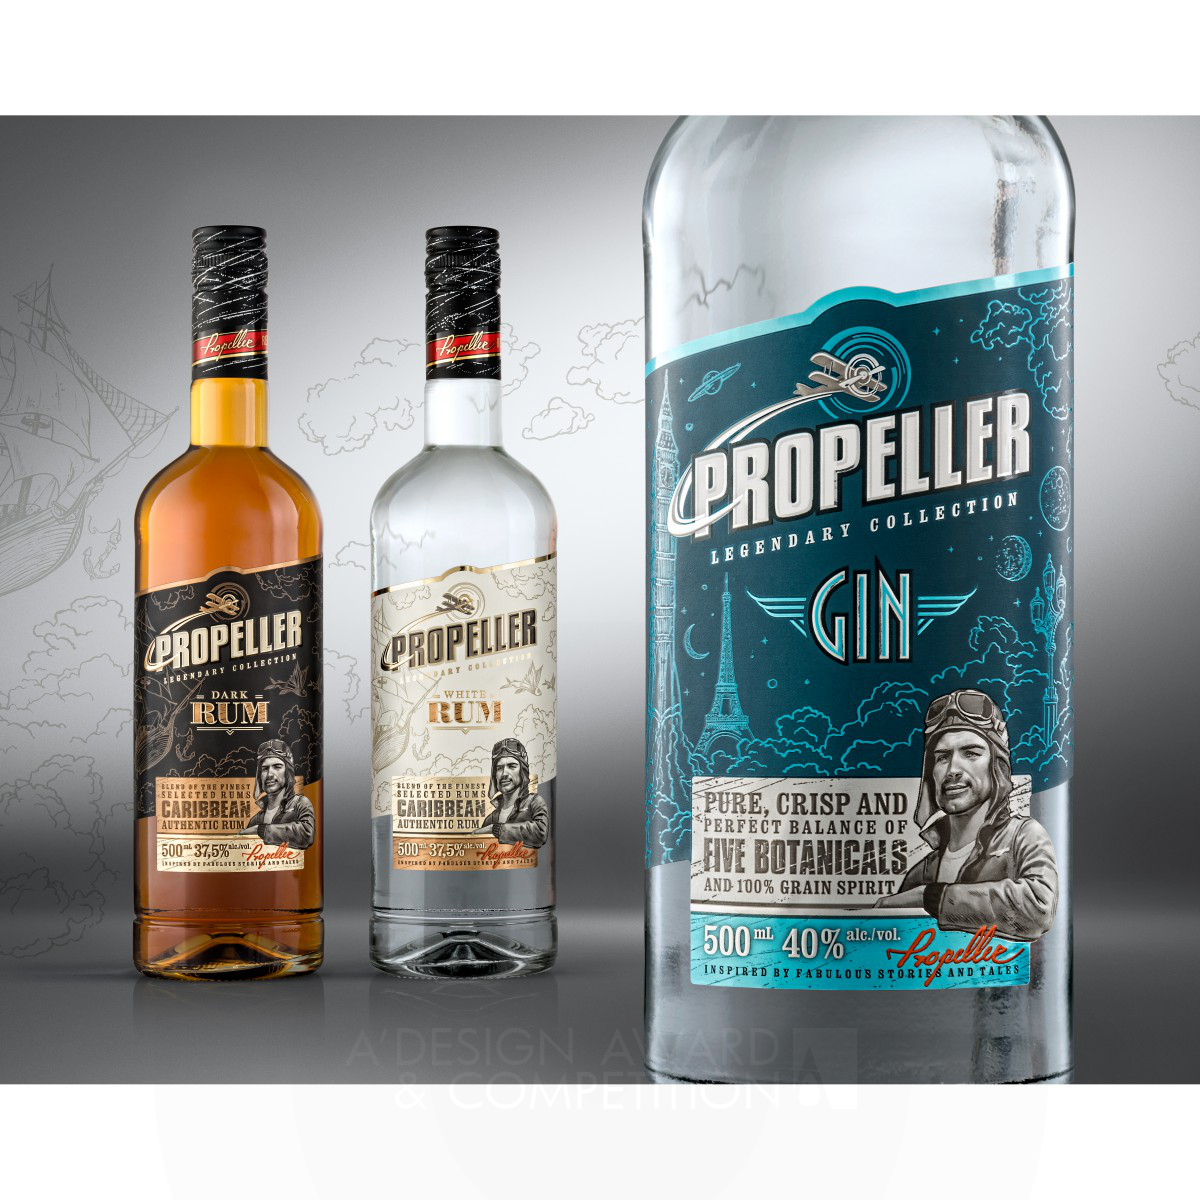 Propeller Labels by Studija Creata Golden Packaging Design Award Winner 2014 